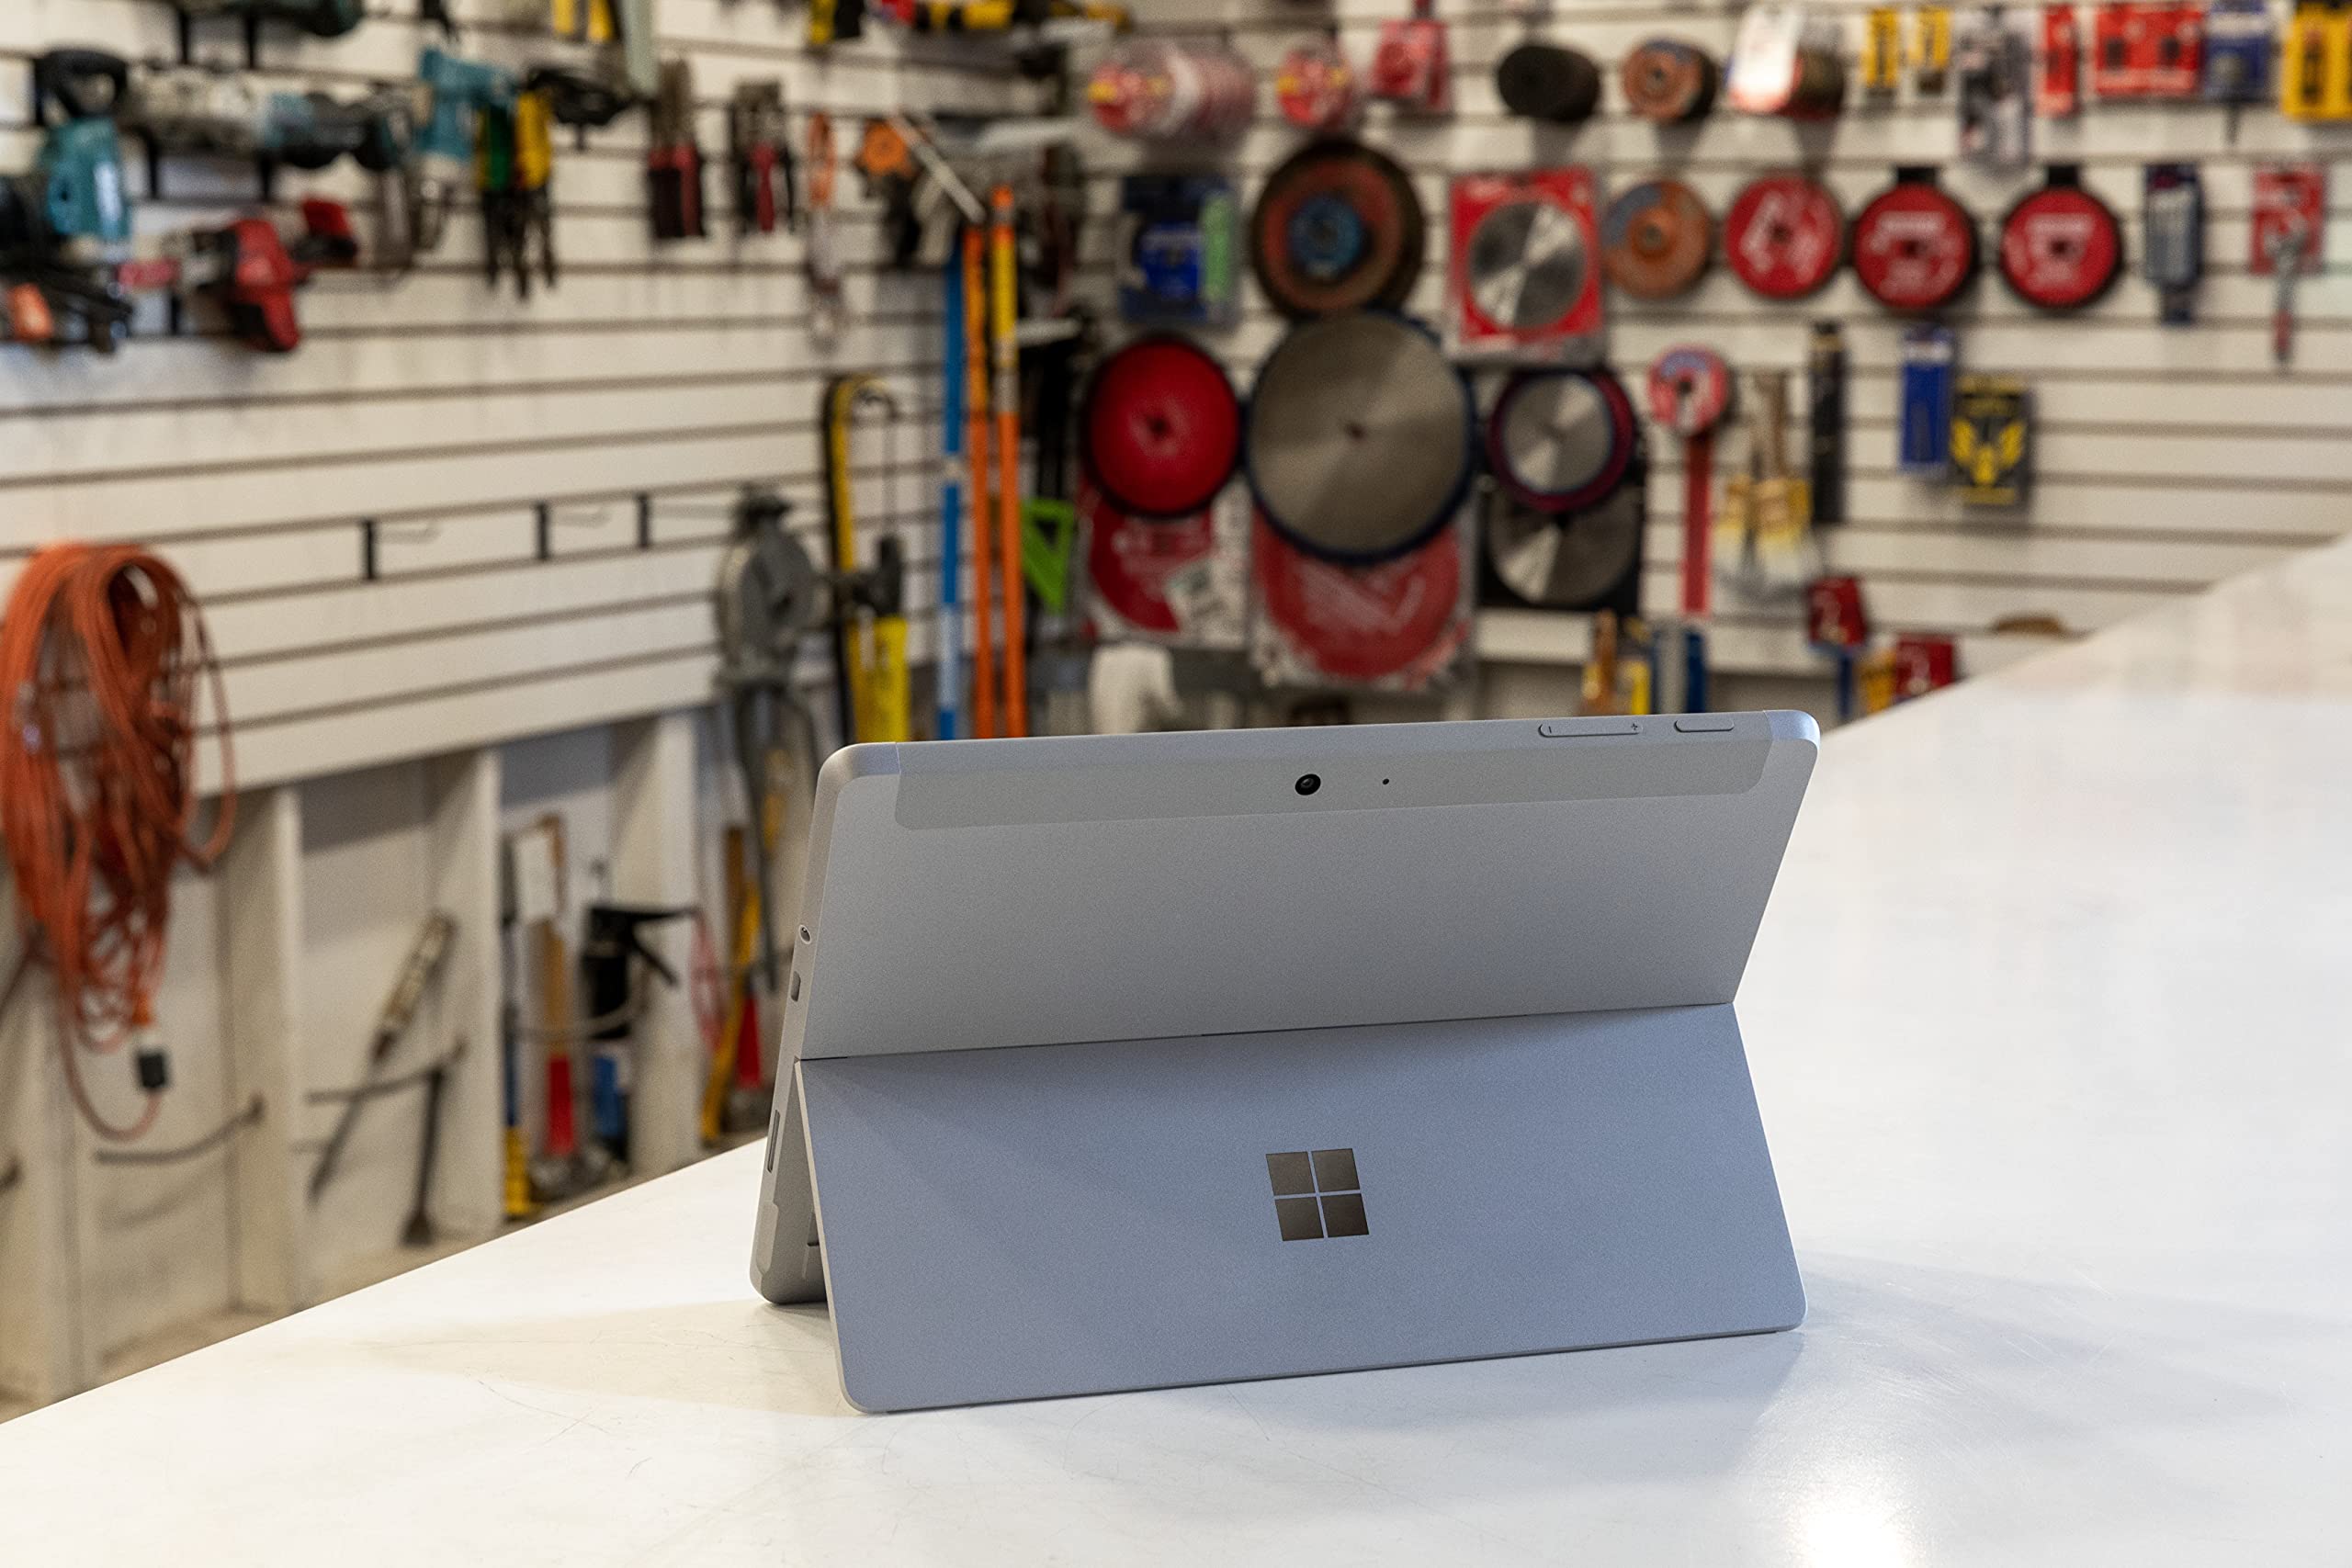 Microsoft Surface Go 2 10.5-Inch Tablet, WiFi, 4Gb Ram, 64Gb Emmc, Windows 10 Pro, Silver Bundled: GIZPRO 3 in 1 USB C to VGA HDMI DVI Adapter